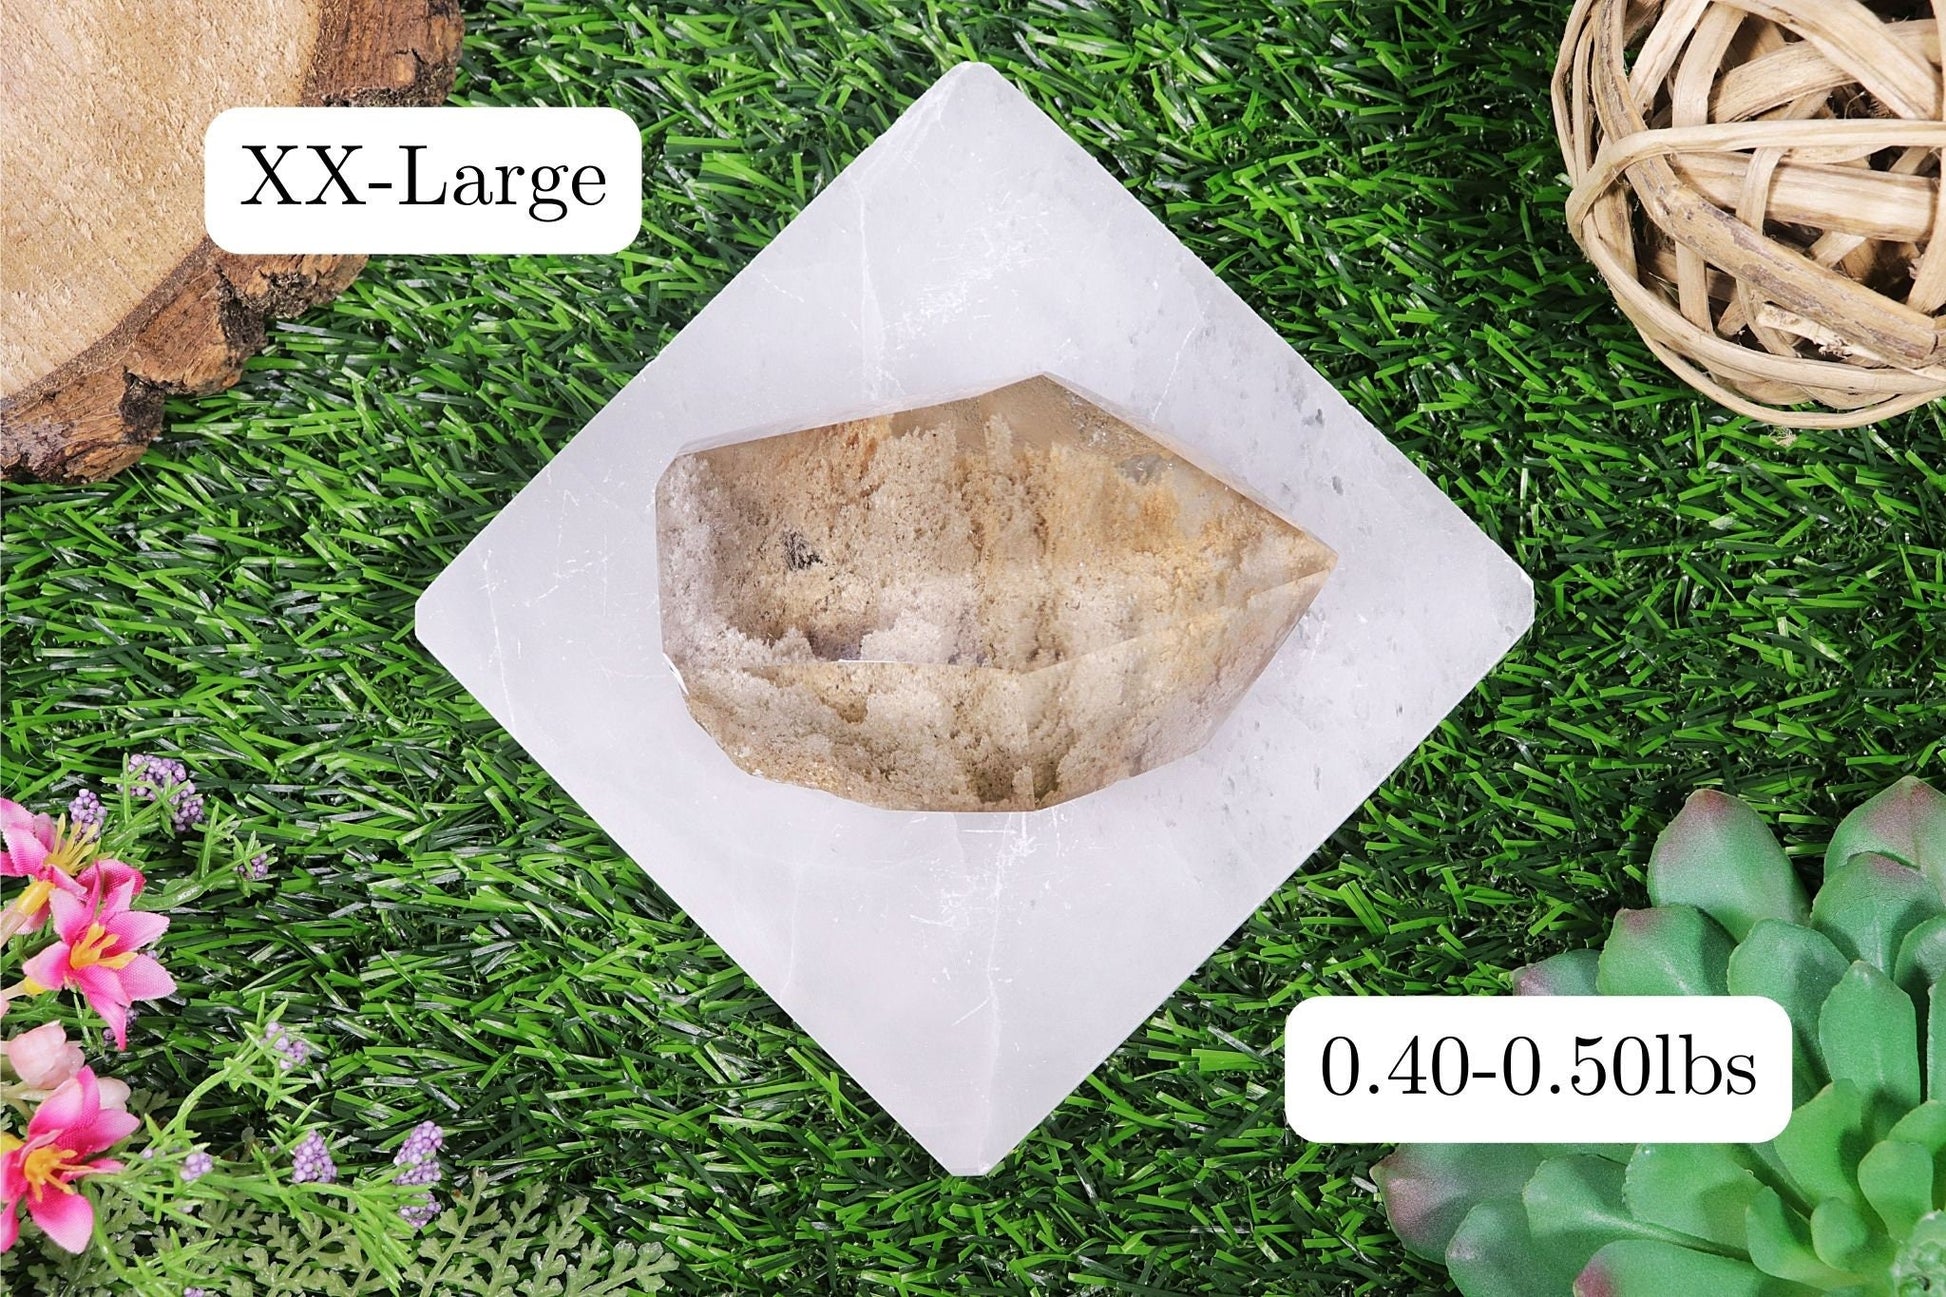 Garden Quartz Crystal, 100% Natural Quartz Free Form With Inclusions, Lodolite